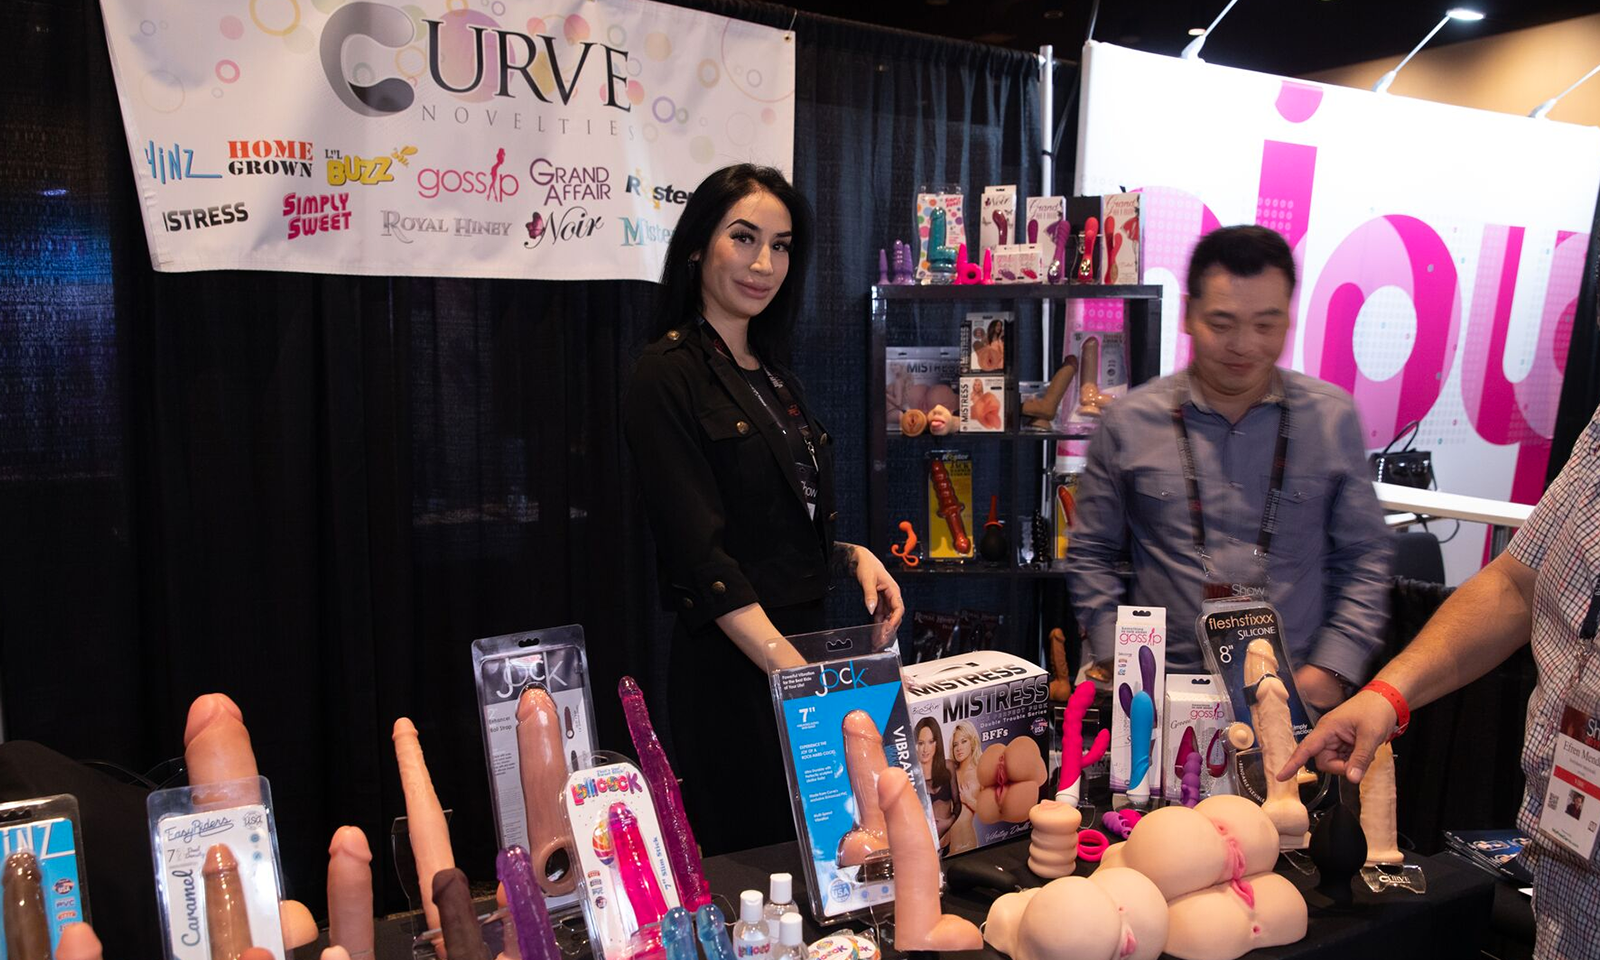 Curve Toys Among Exhibitors at AVN Novelty Expo